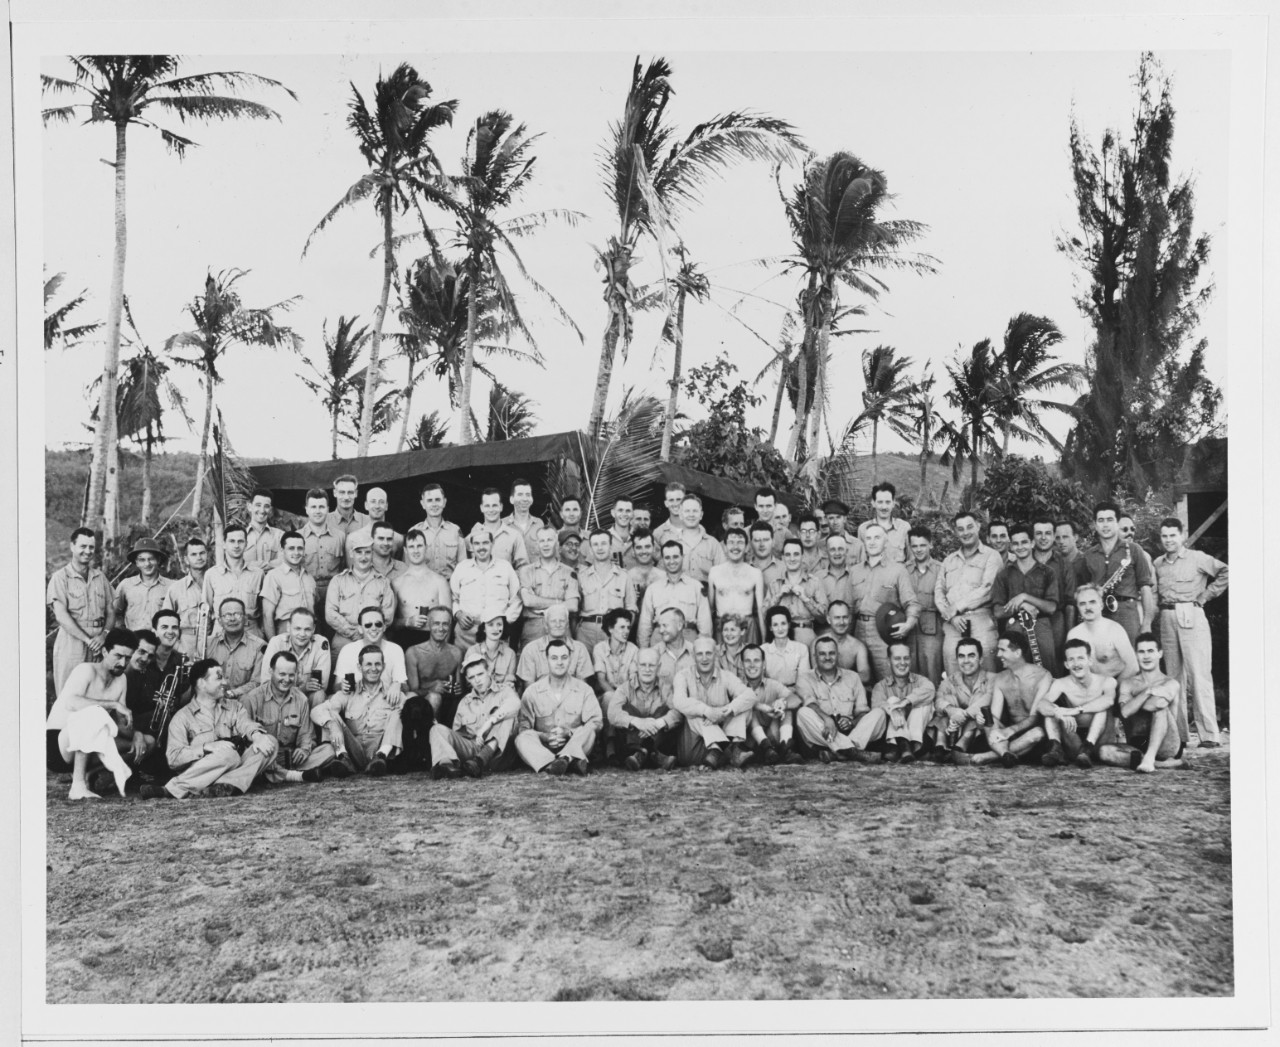 Fleet Admiral Nimitz Attends a Correspondents' Beach Party